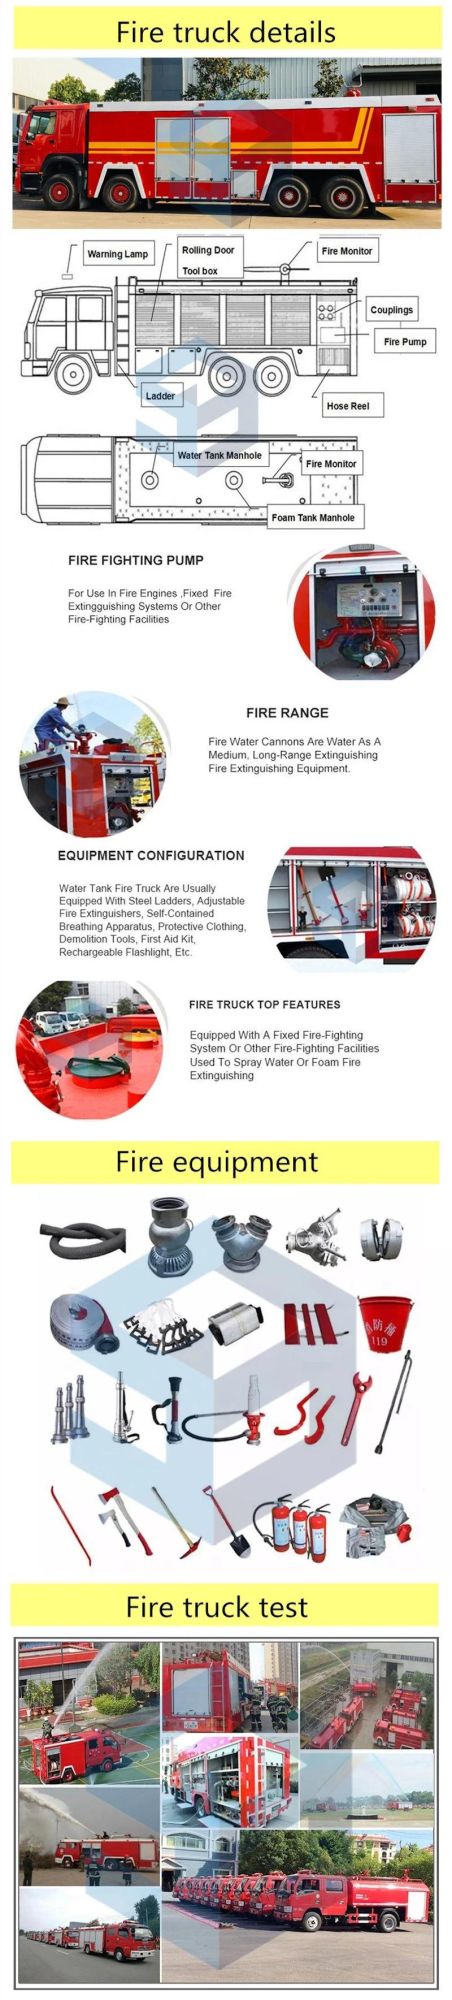 Isuzu Fire Truck Water Tanker 16 Tons Airport Fire Fighting Truck Price